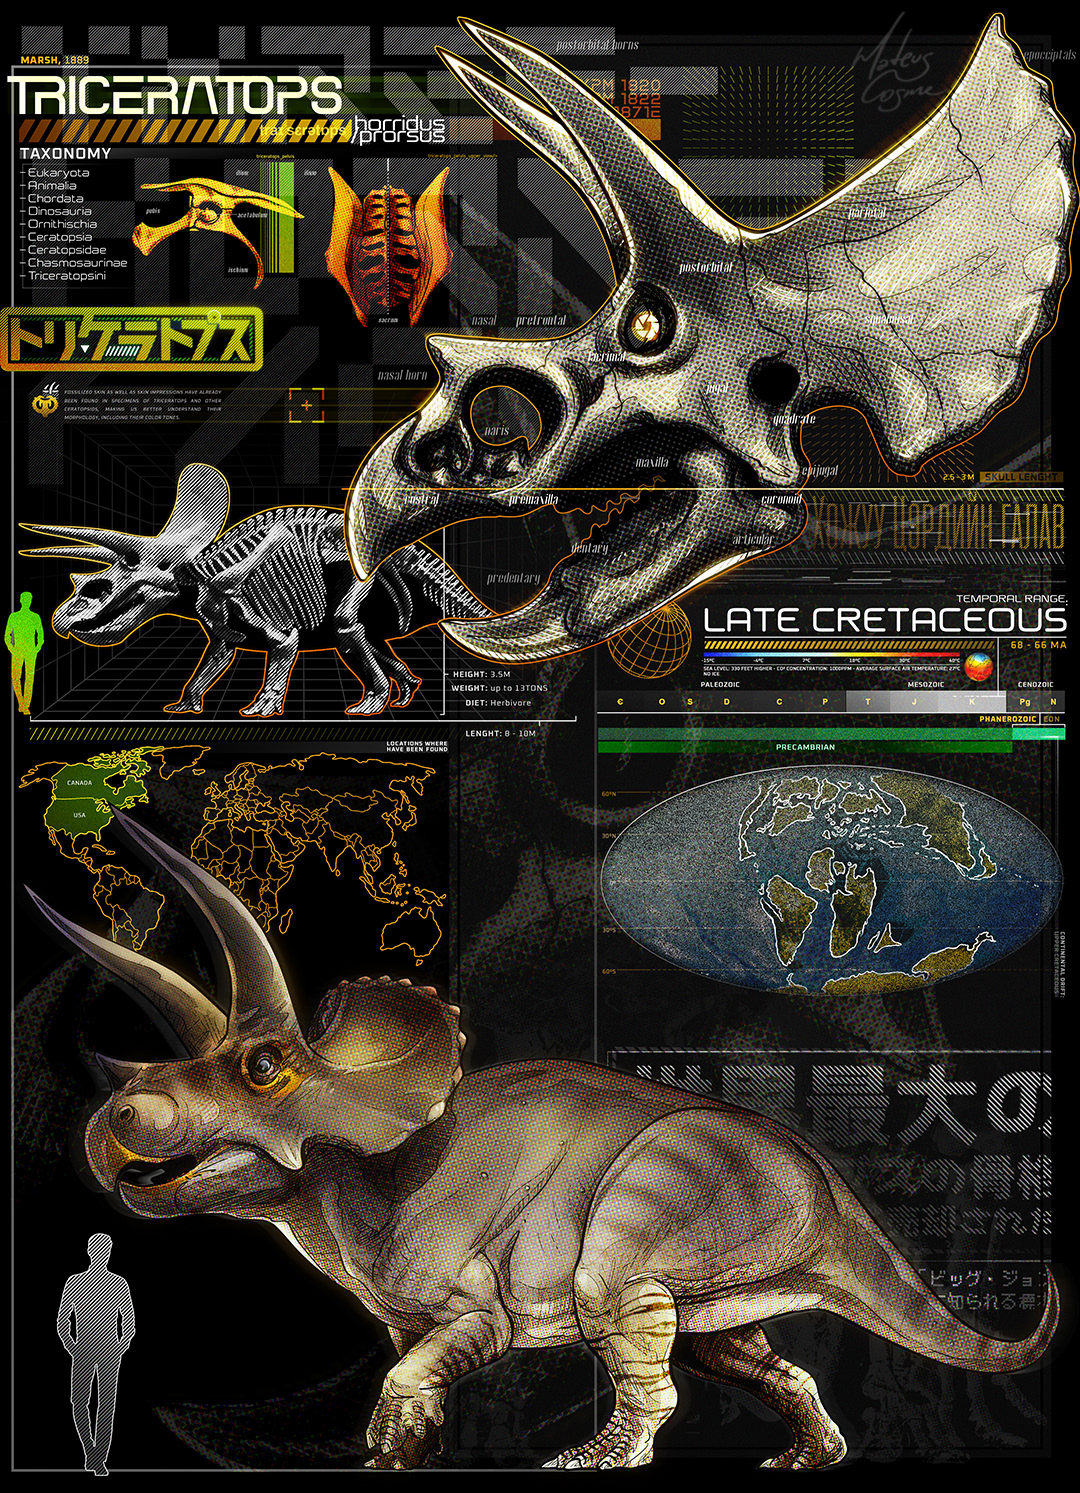 Dinosaur triceratops jurassic prehistoric database paleoart science poster Cretaceous mesozoic